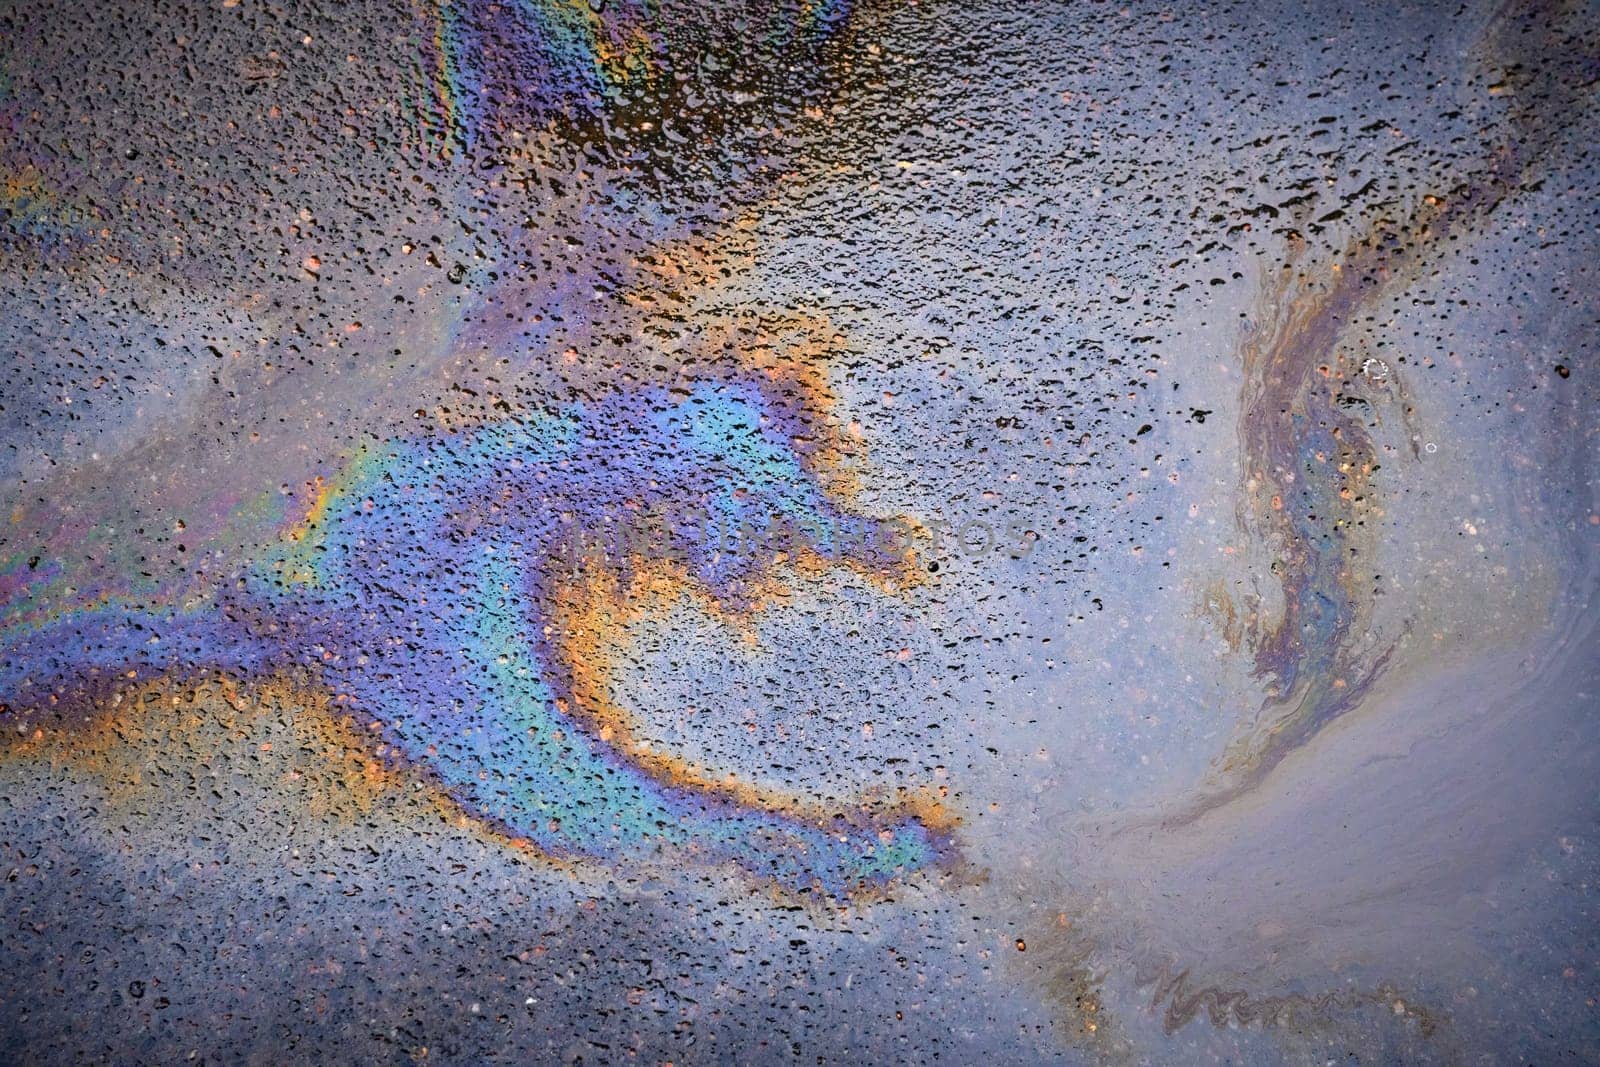 Oil rainbow gasoline spill on asphalt. Rainbow stains of oil and gasoline